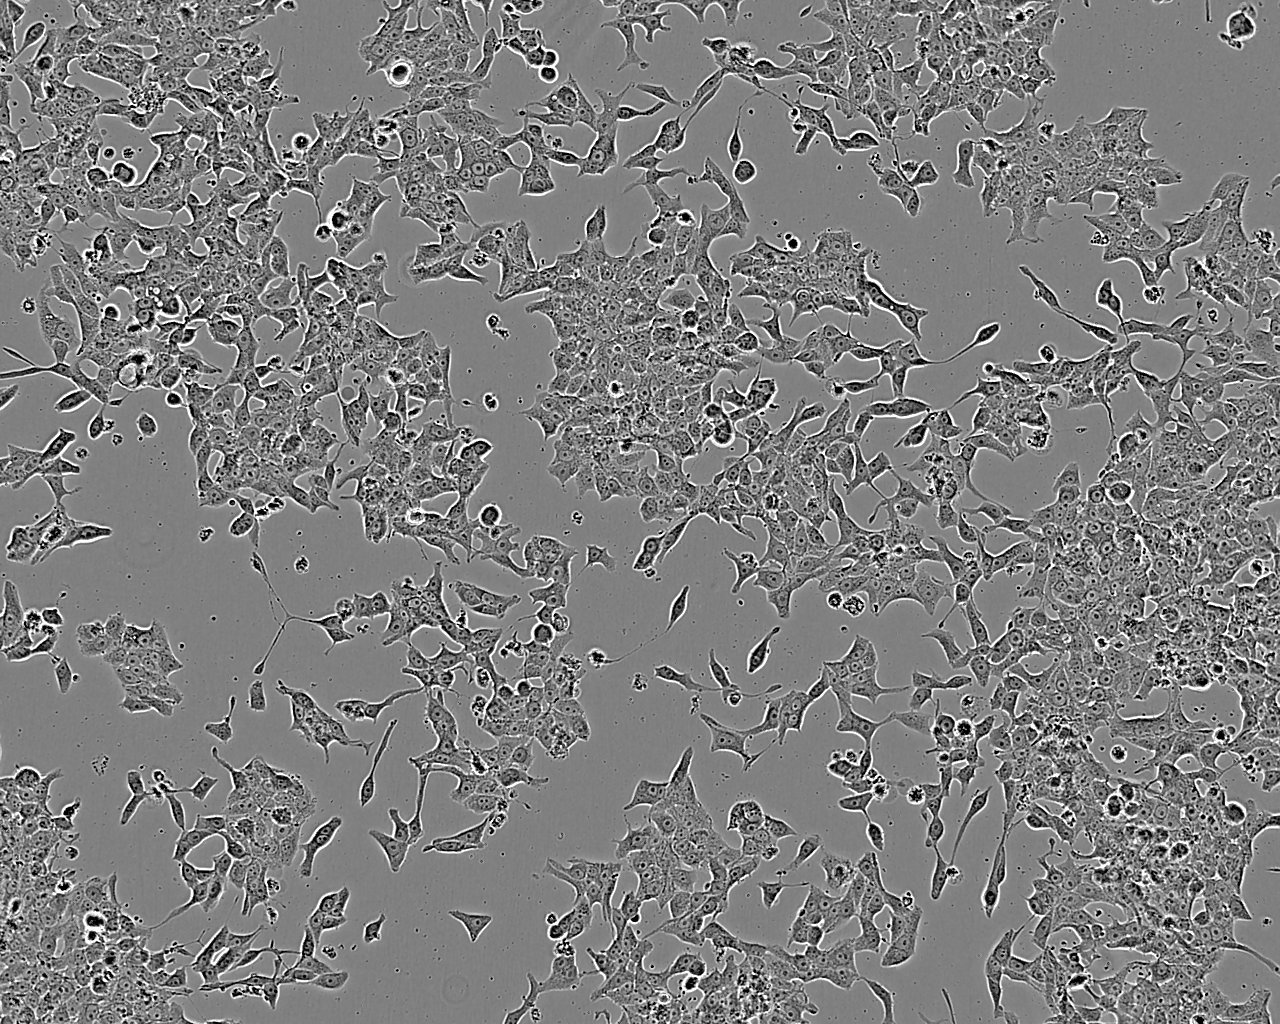 NCI-H209 epithelioid cells人小细胞肺癌细胞系,NCI-H209 epithelioid cells